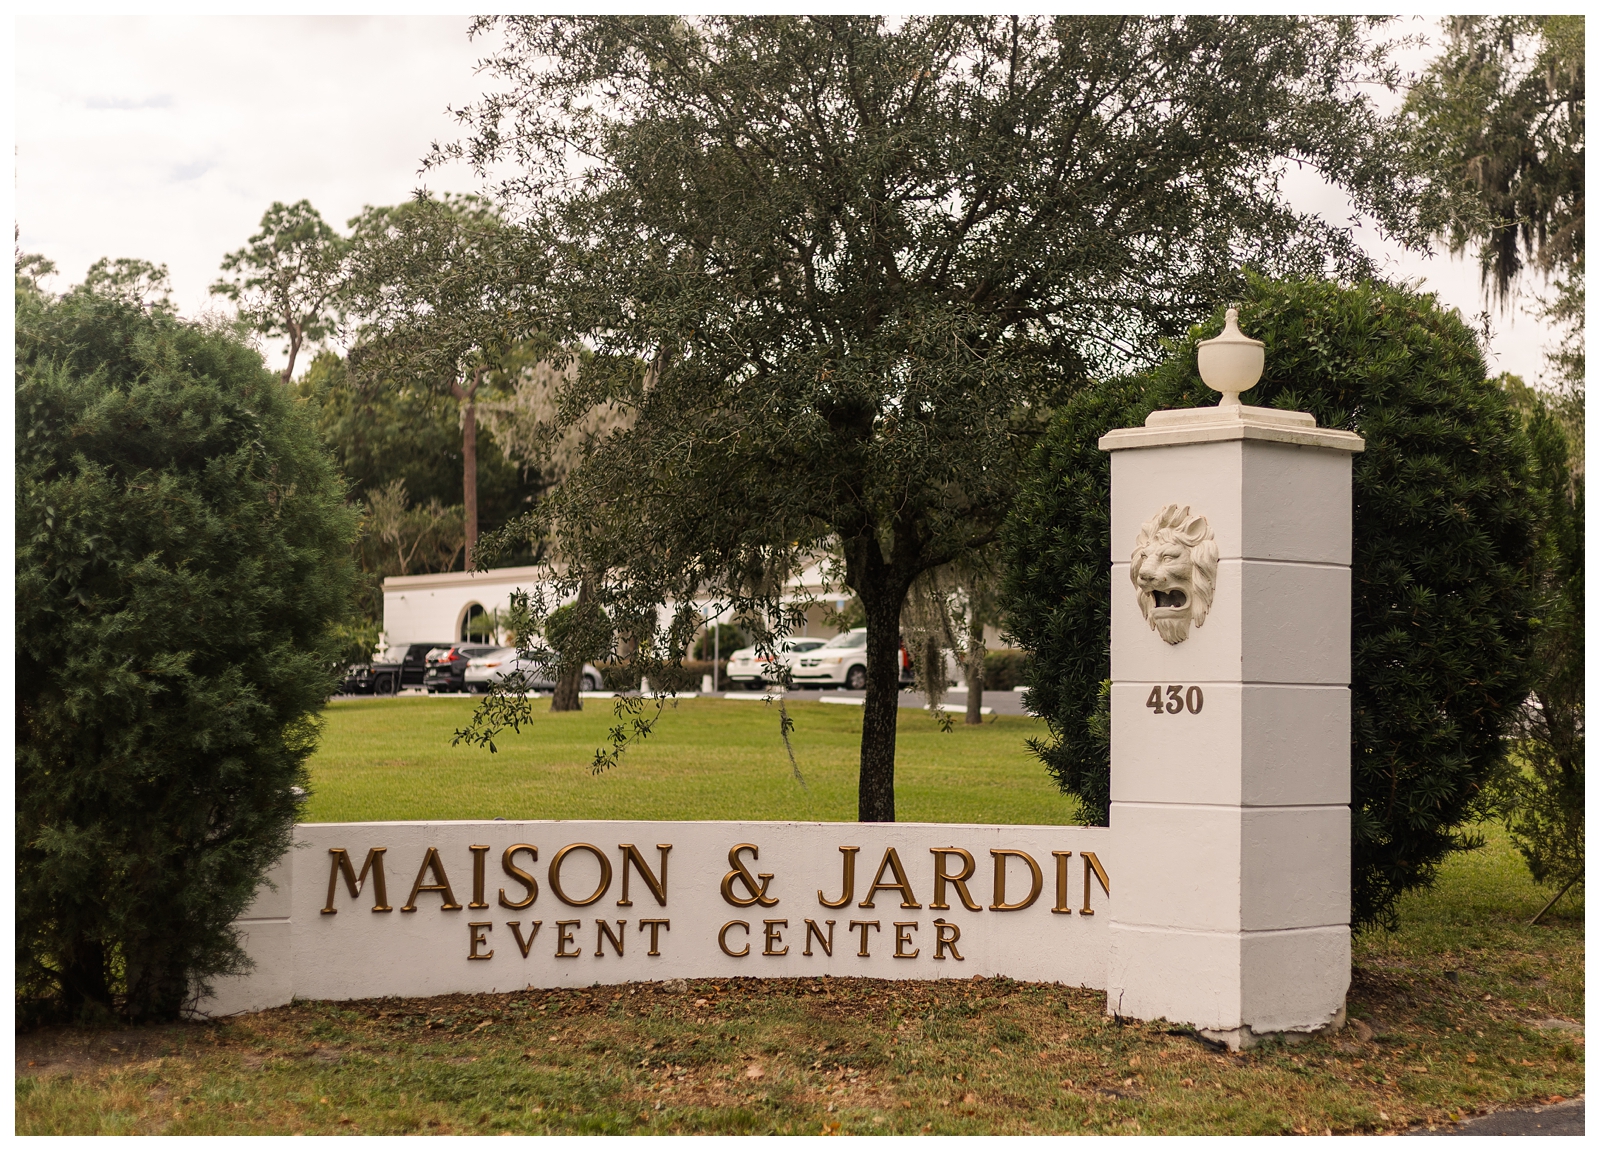 Maison and Jardin Event Center